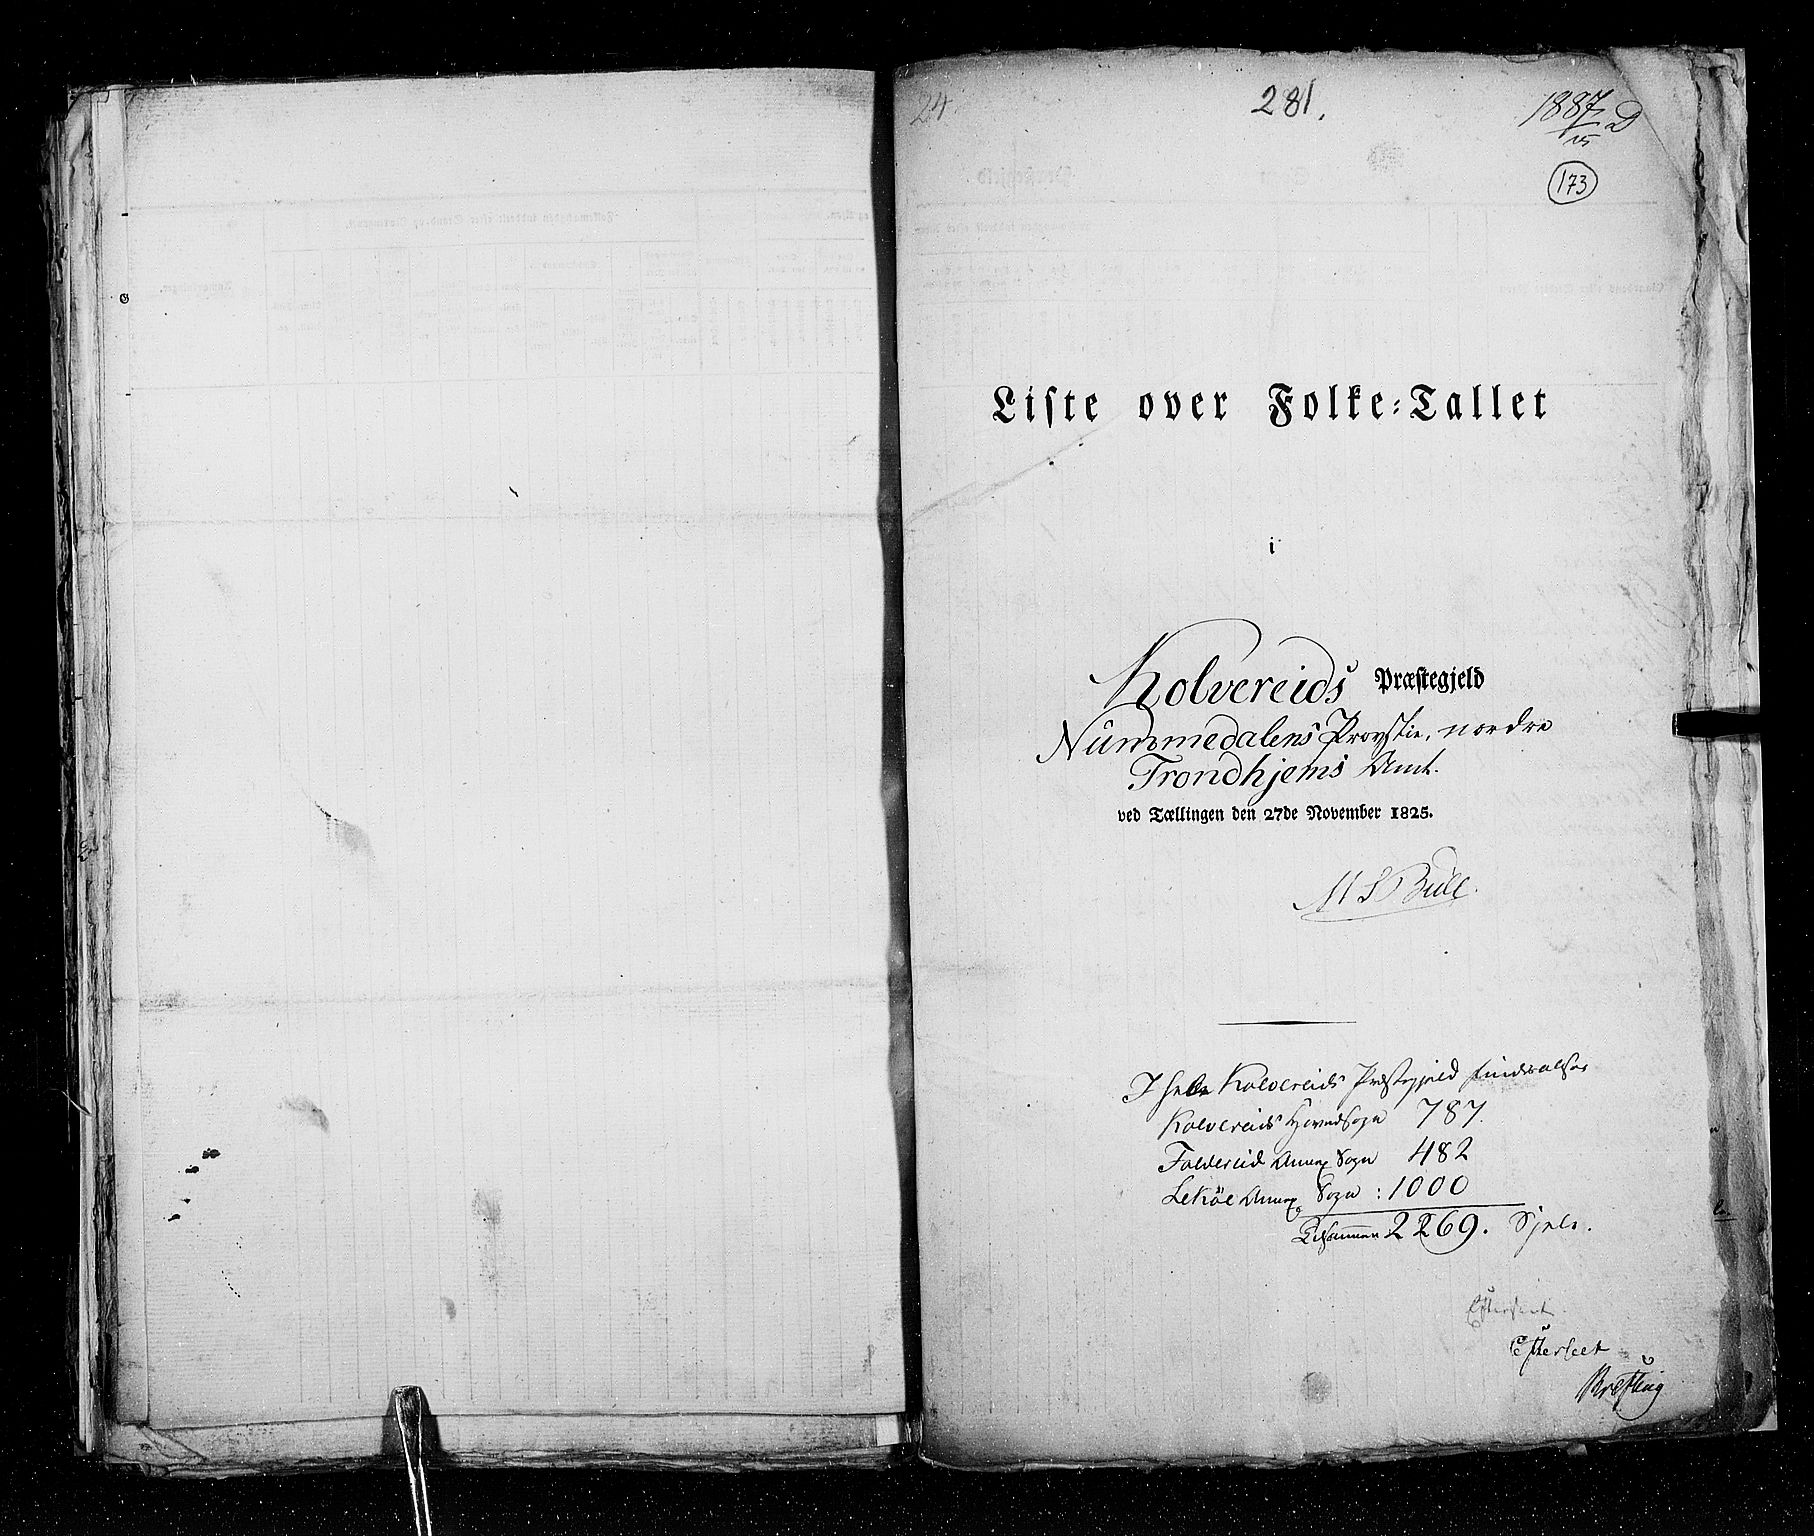 RA, Census 1825, vol. 17: Nordre Trondhjem amt, 1825, p. 173